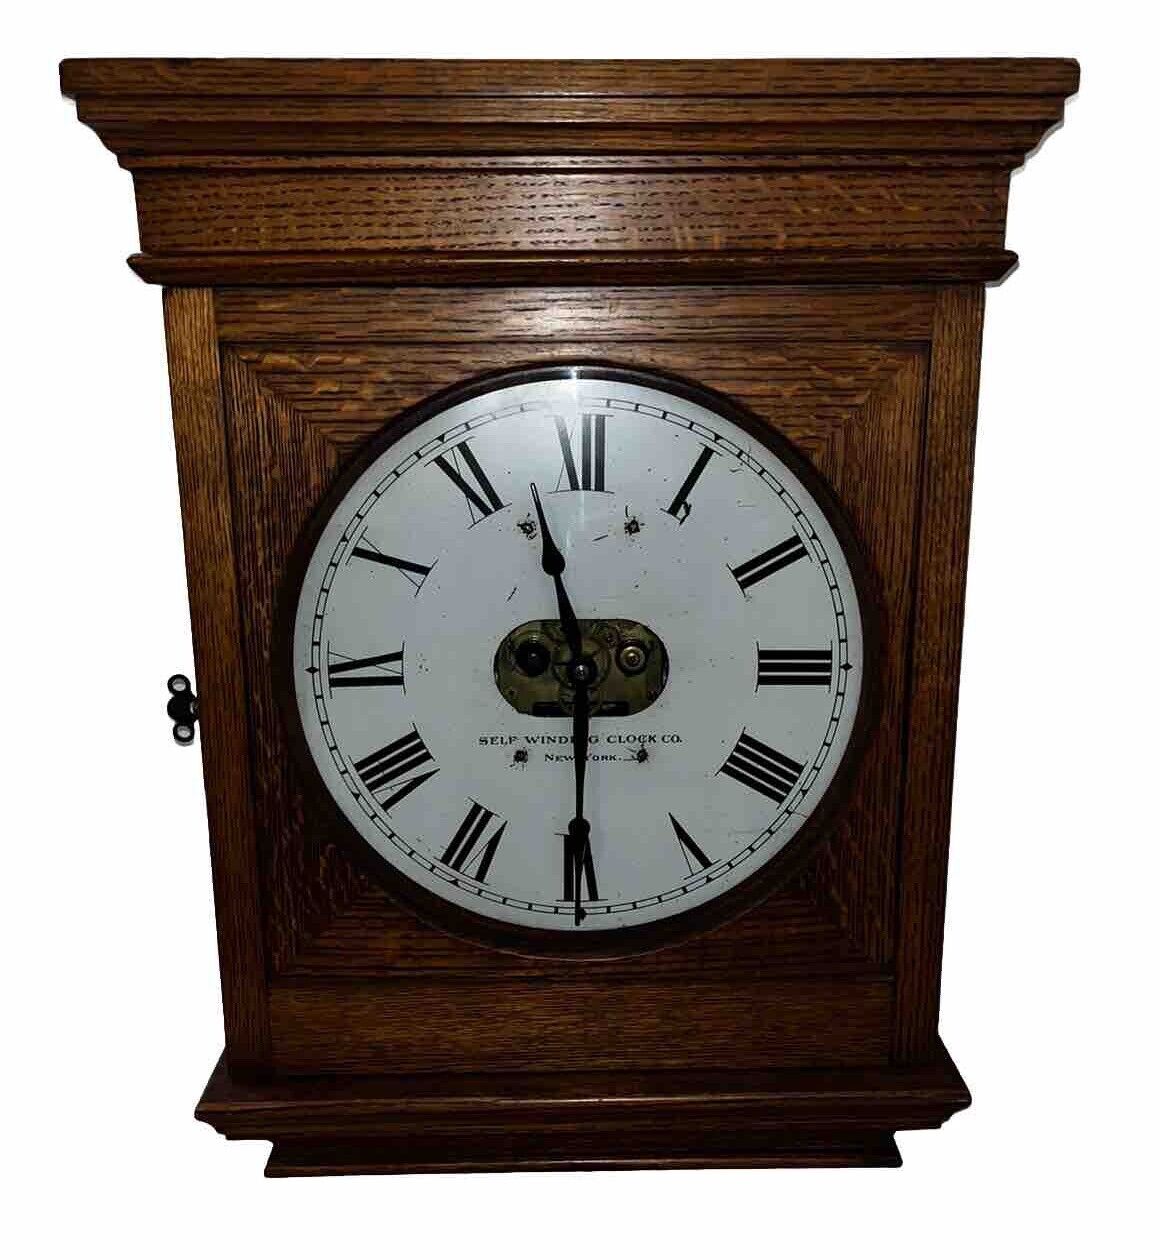 Antique Self-Winding Clock Co. (New York) 220 Volts Master Wall Clock.